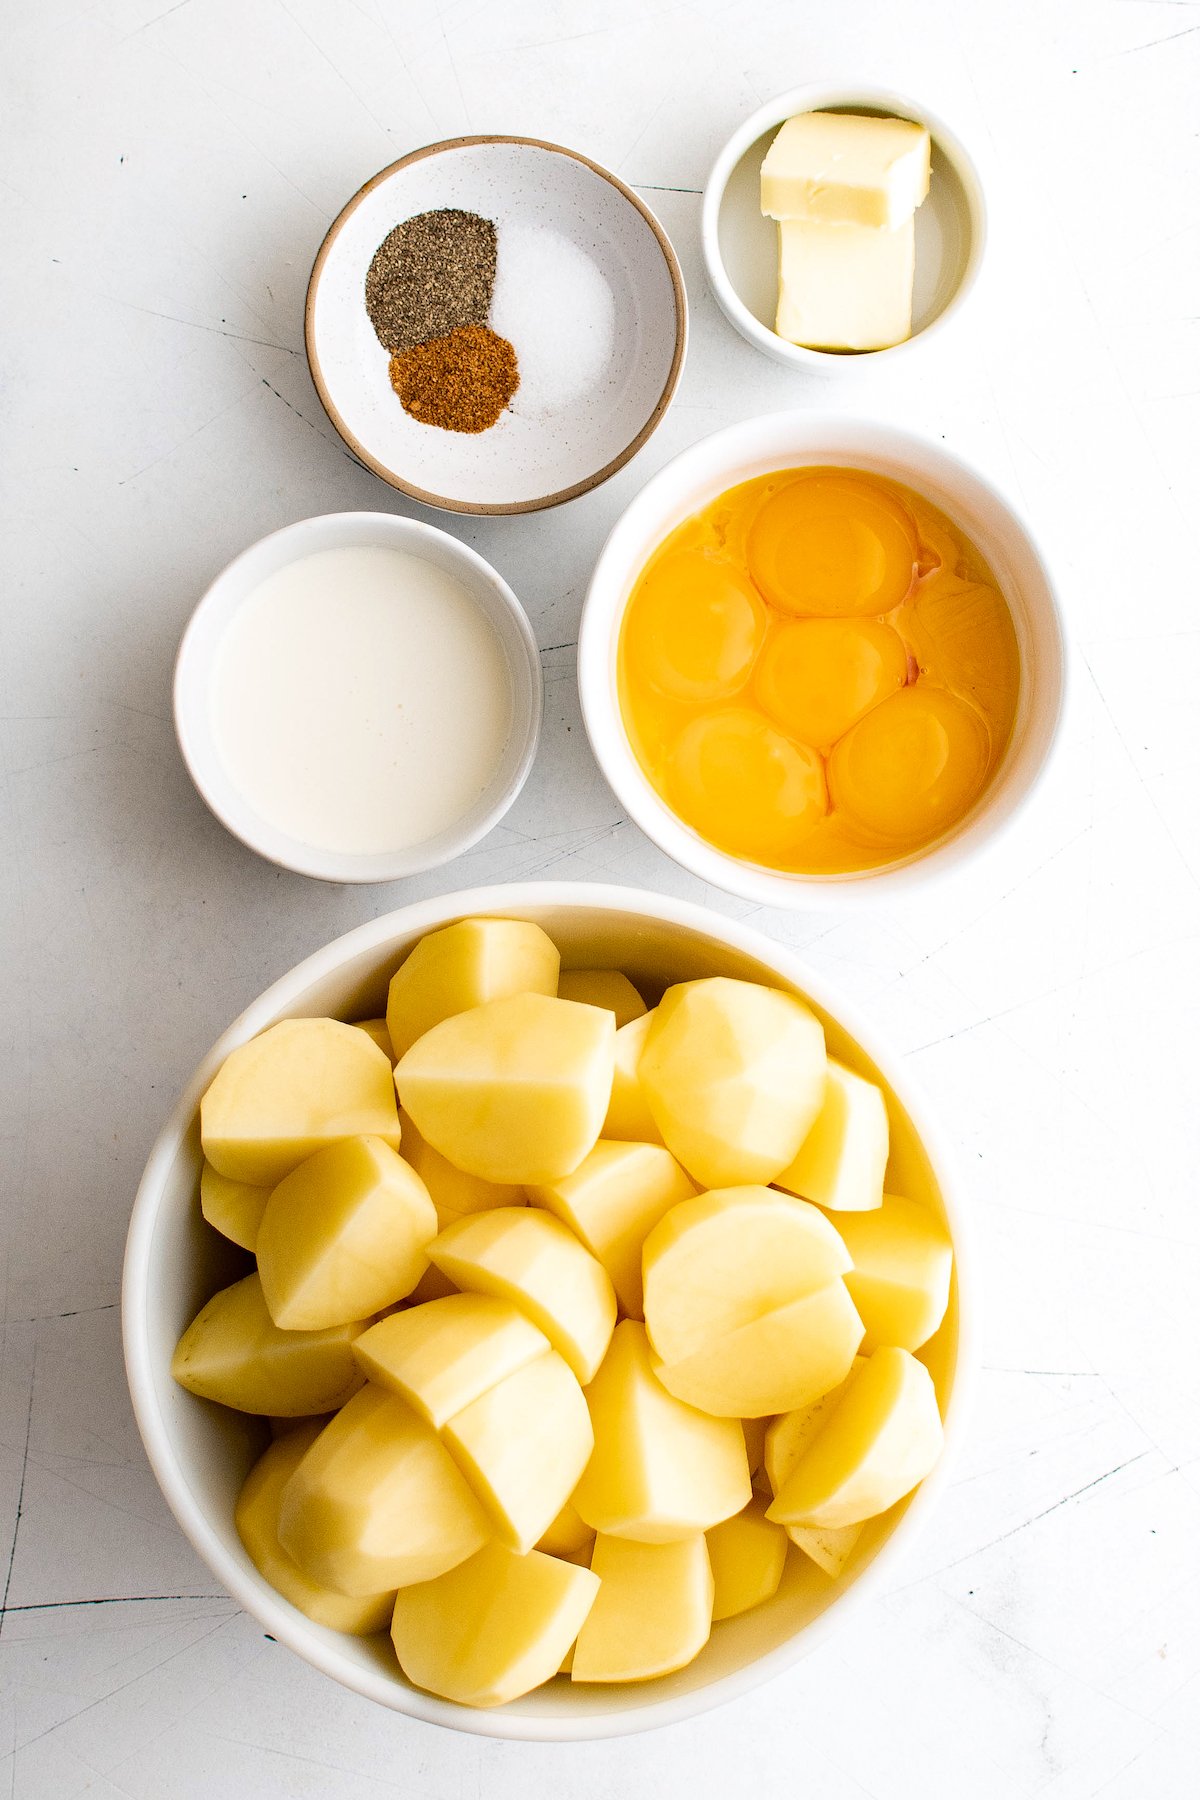 From top: Seasonings, butter, egg yolks, potatoes, cream.